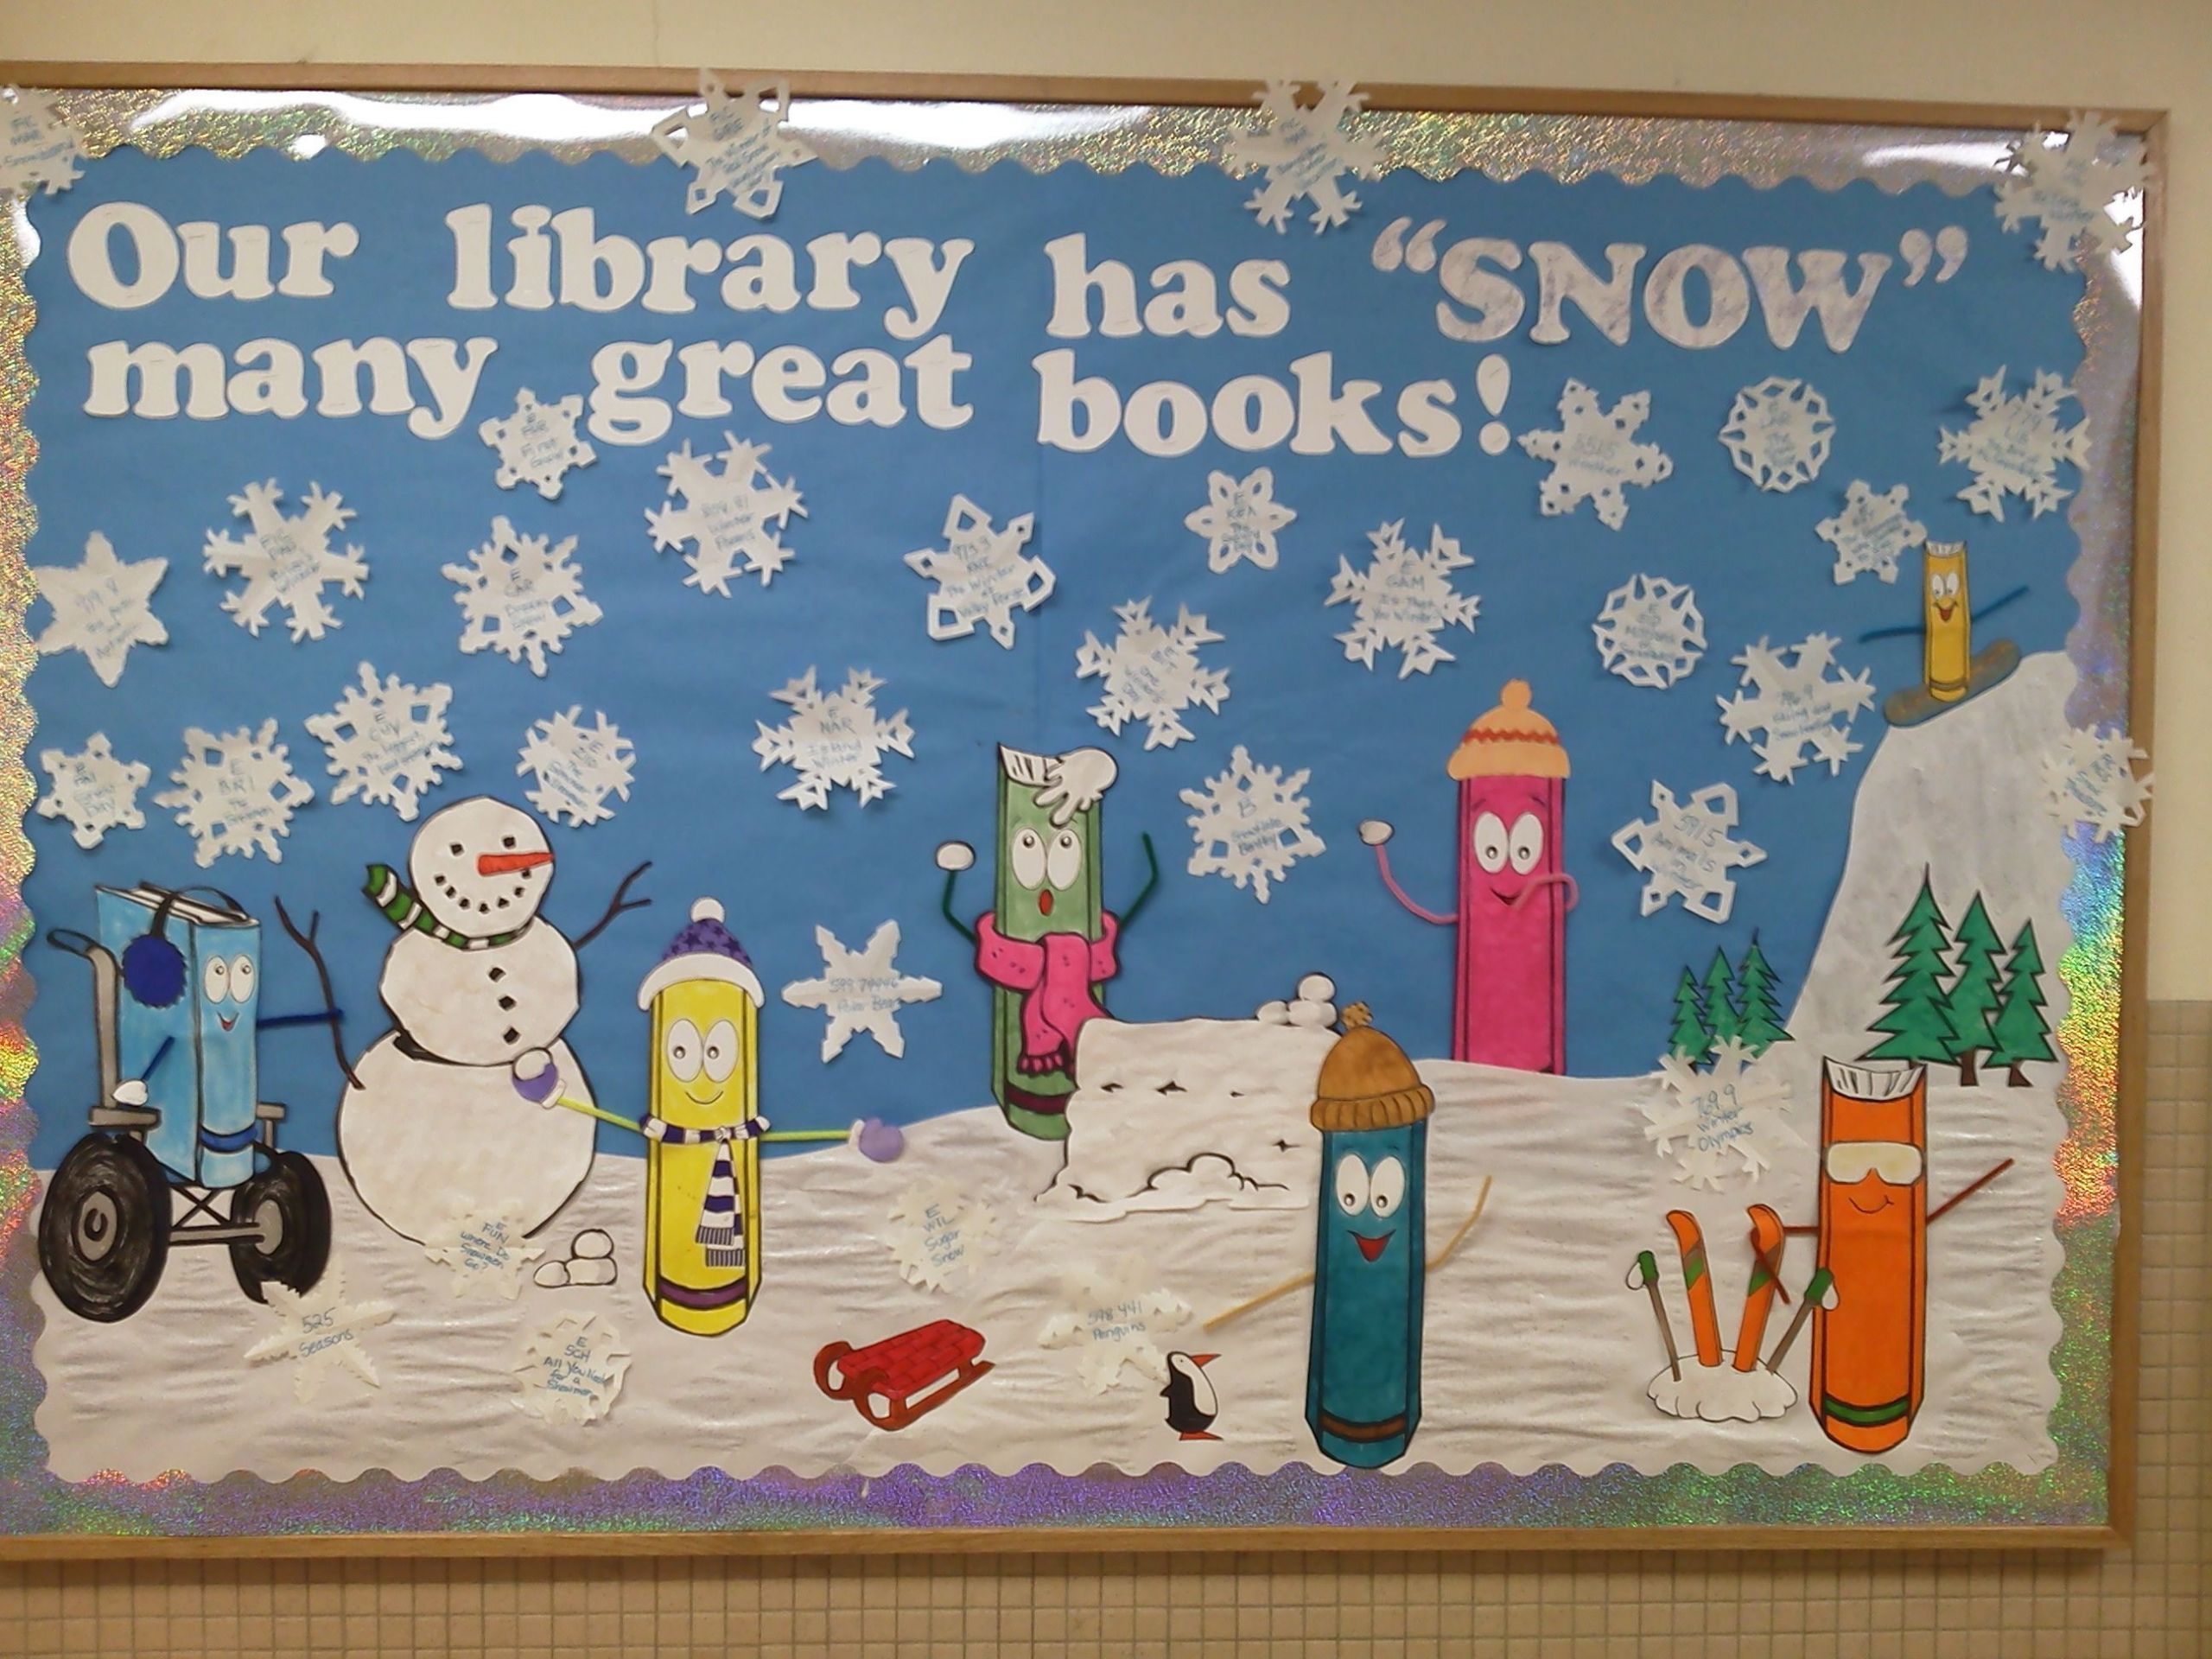 Winter Bulletin Board Ideas Elementary School
 Our Library Has "Snow" Many Great Books Bulletin board